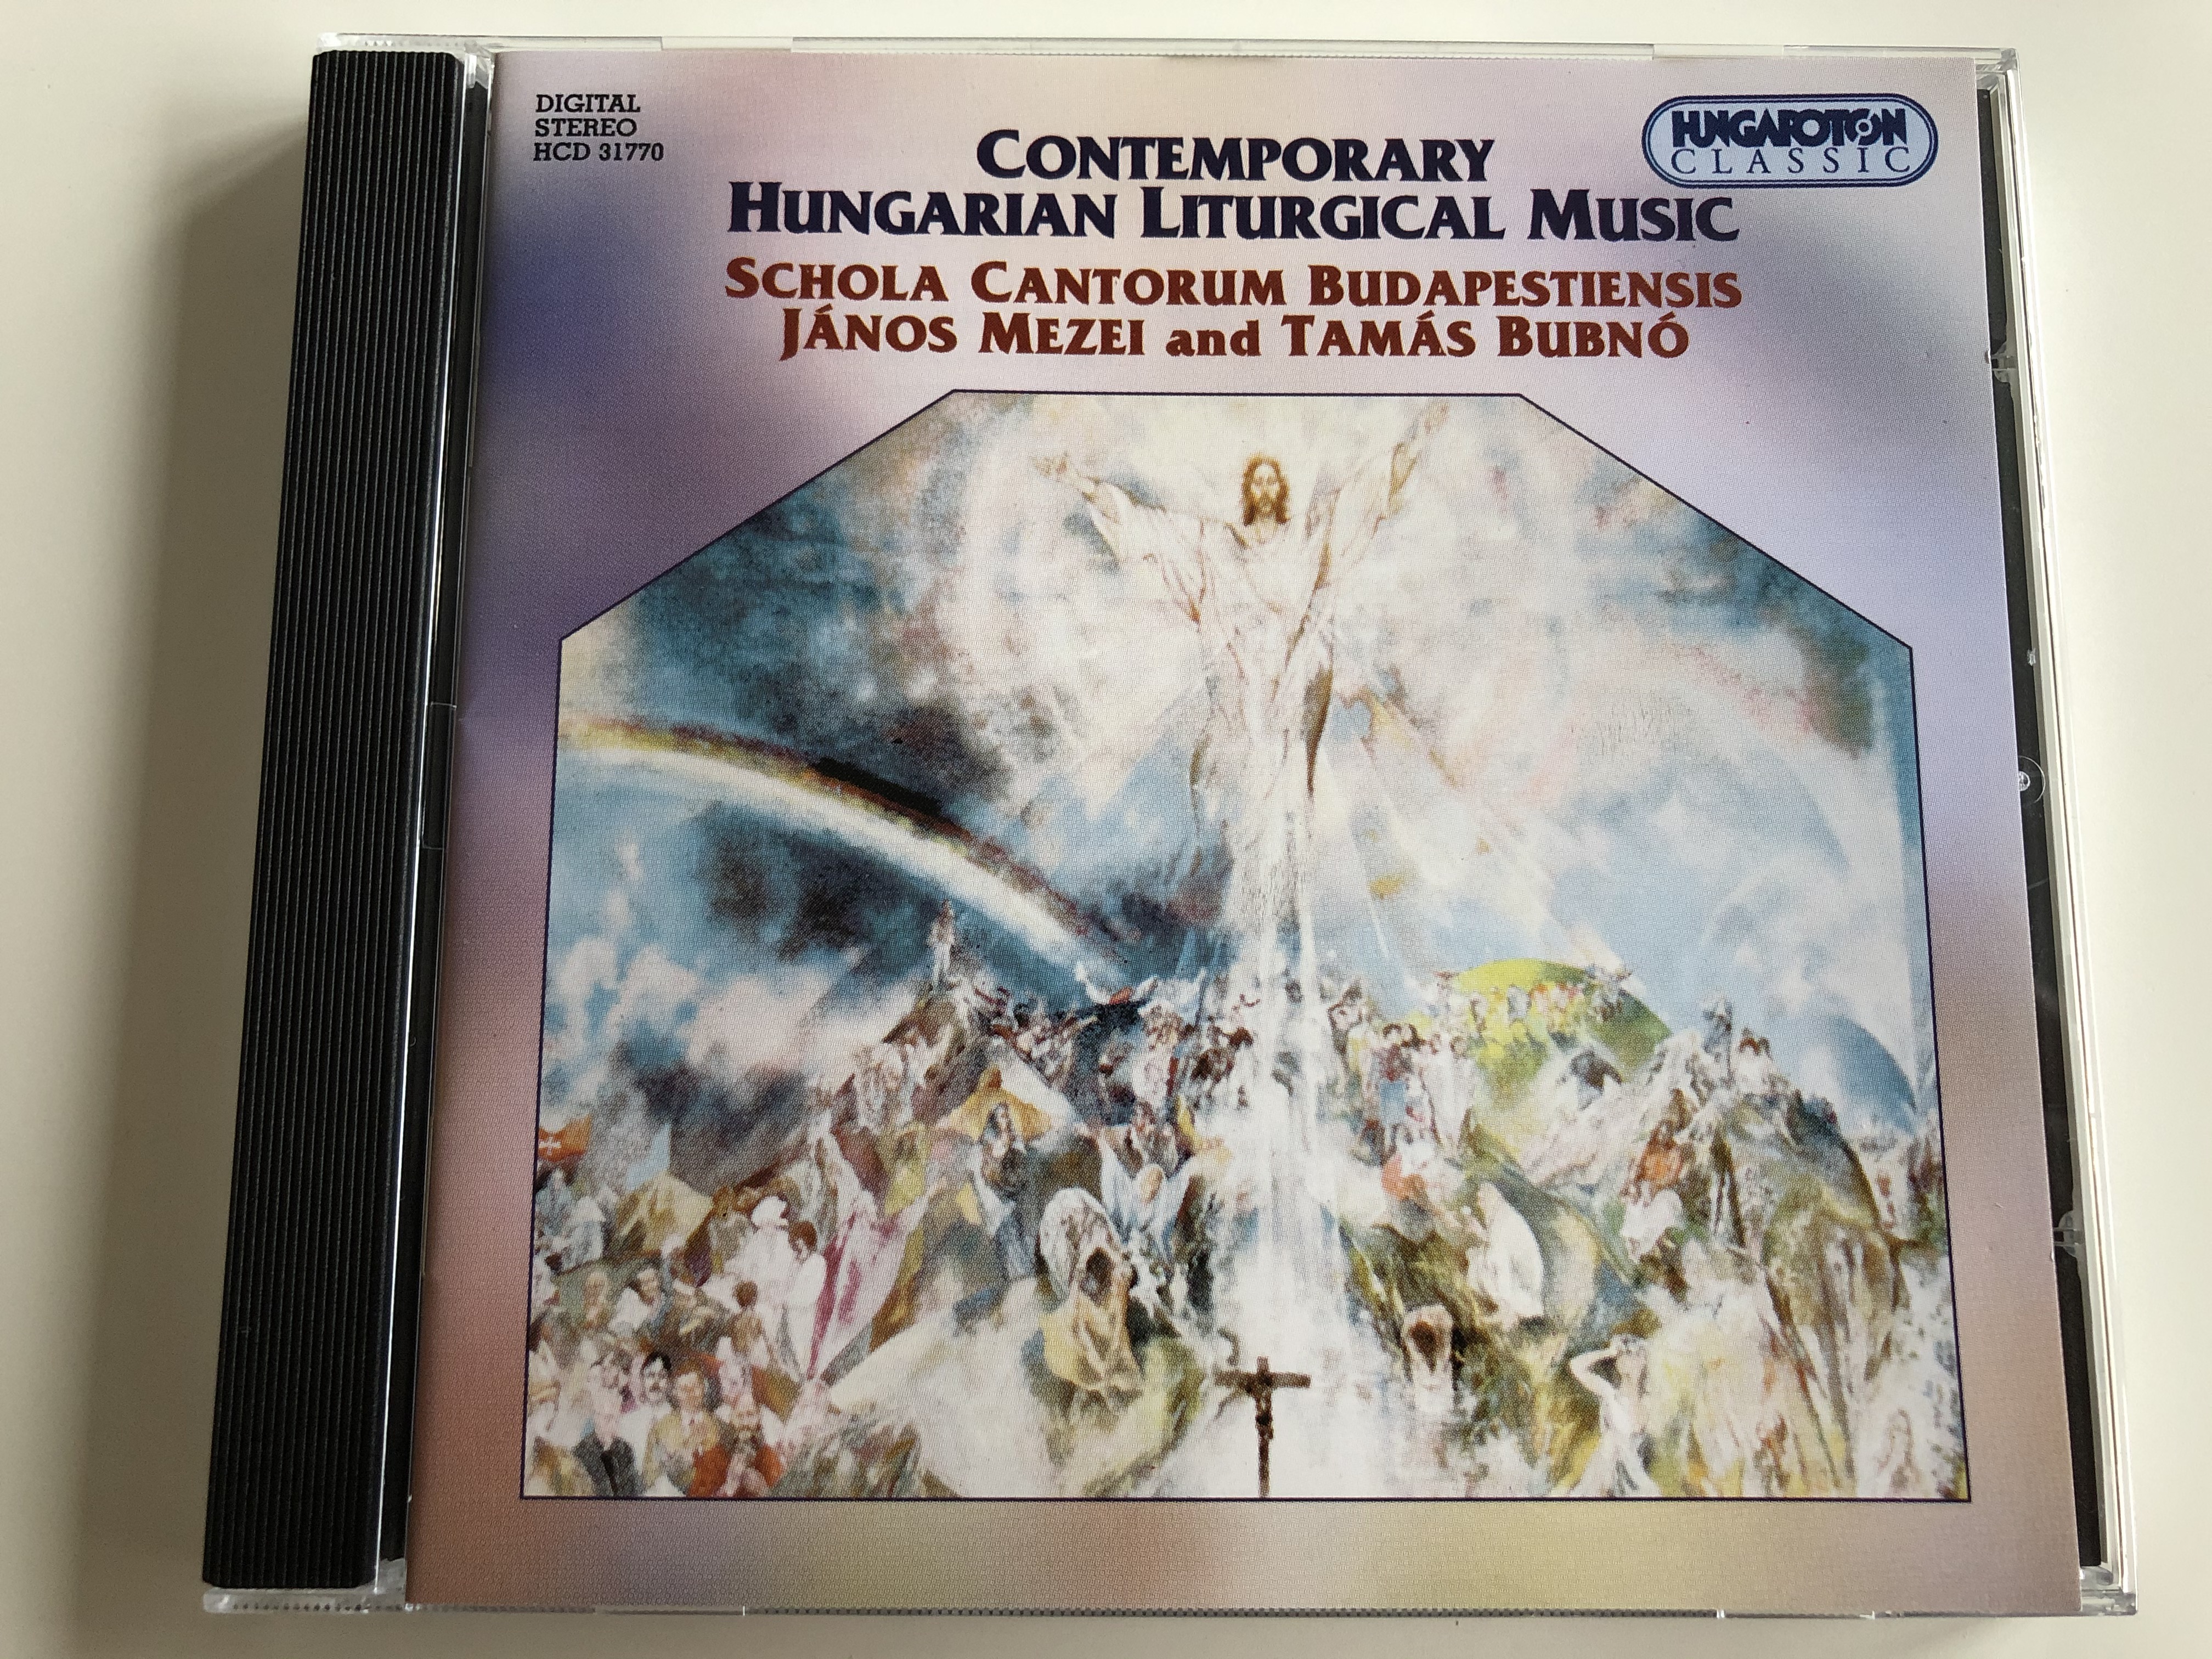 contemporary-hungarian-liturgical-music-schola-cantorum-budapestiensis-j-nos-mezei-and-tam-s-bubn-hungaroton-classic-audio-cd-1998-stereo-hcd-31770-1-.jpg